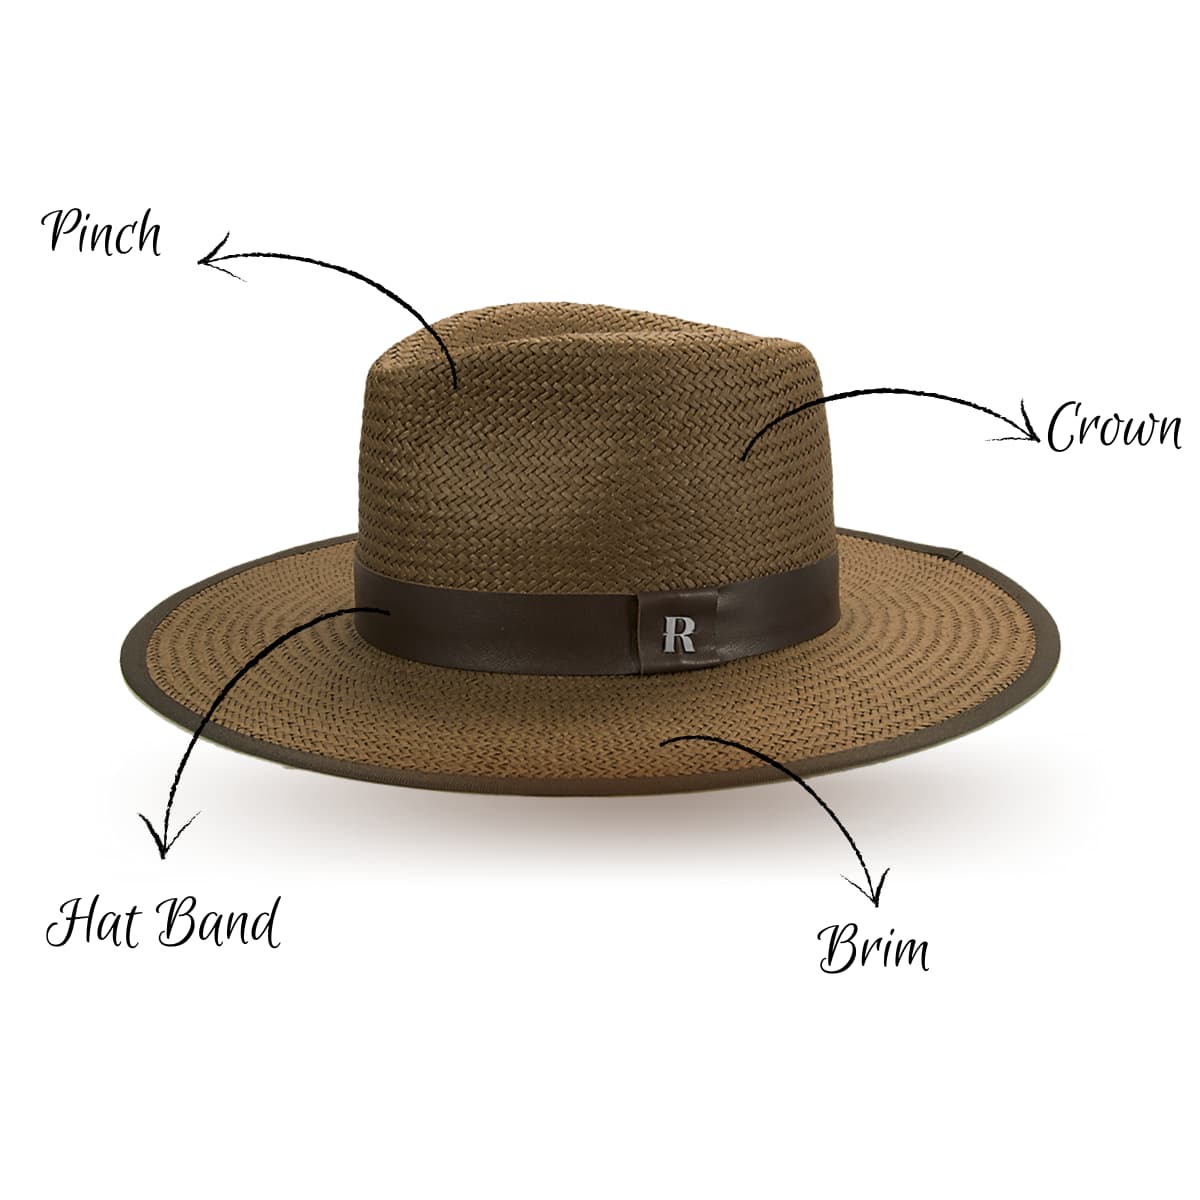 Straw Hat Florida Brown - Fedora Style